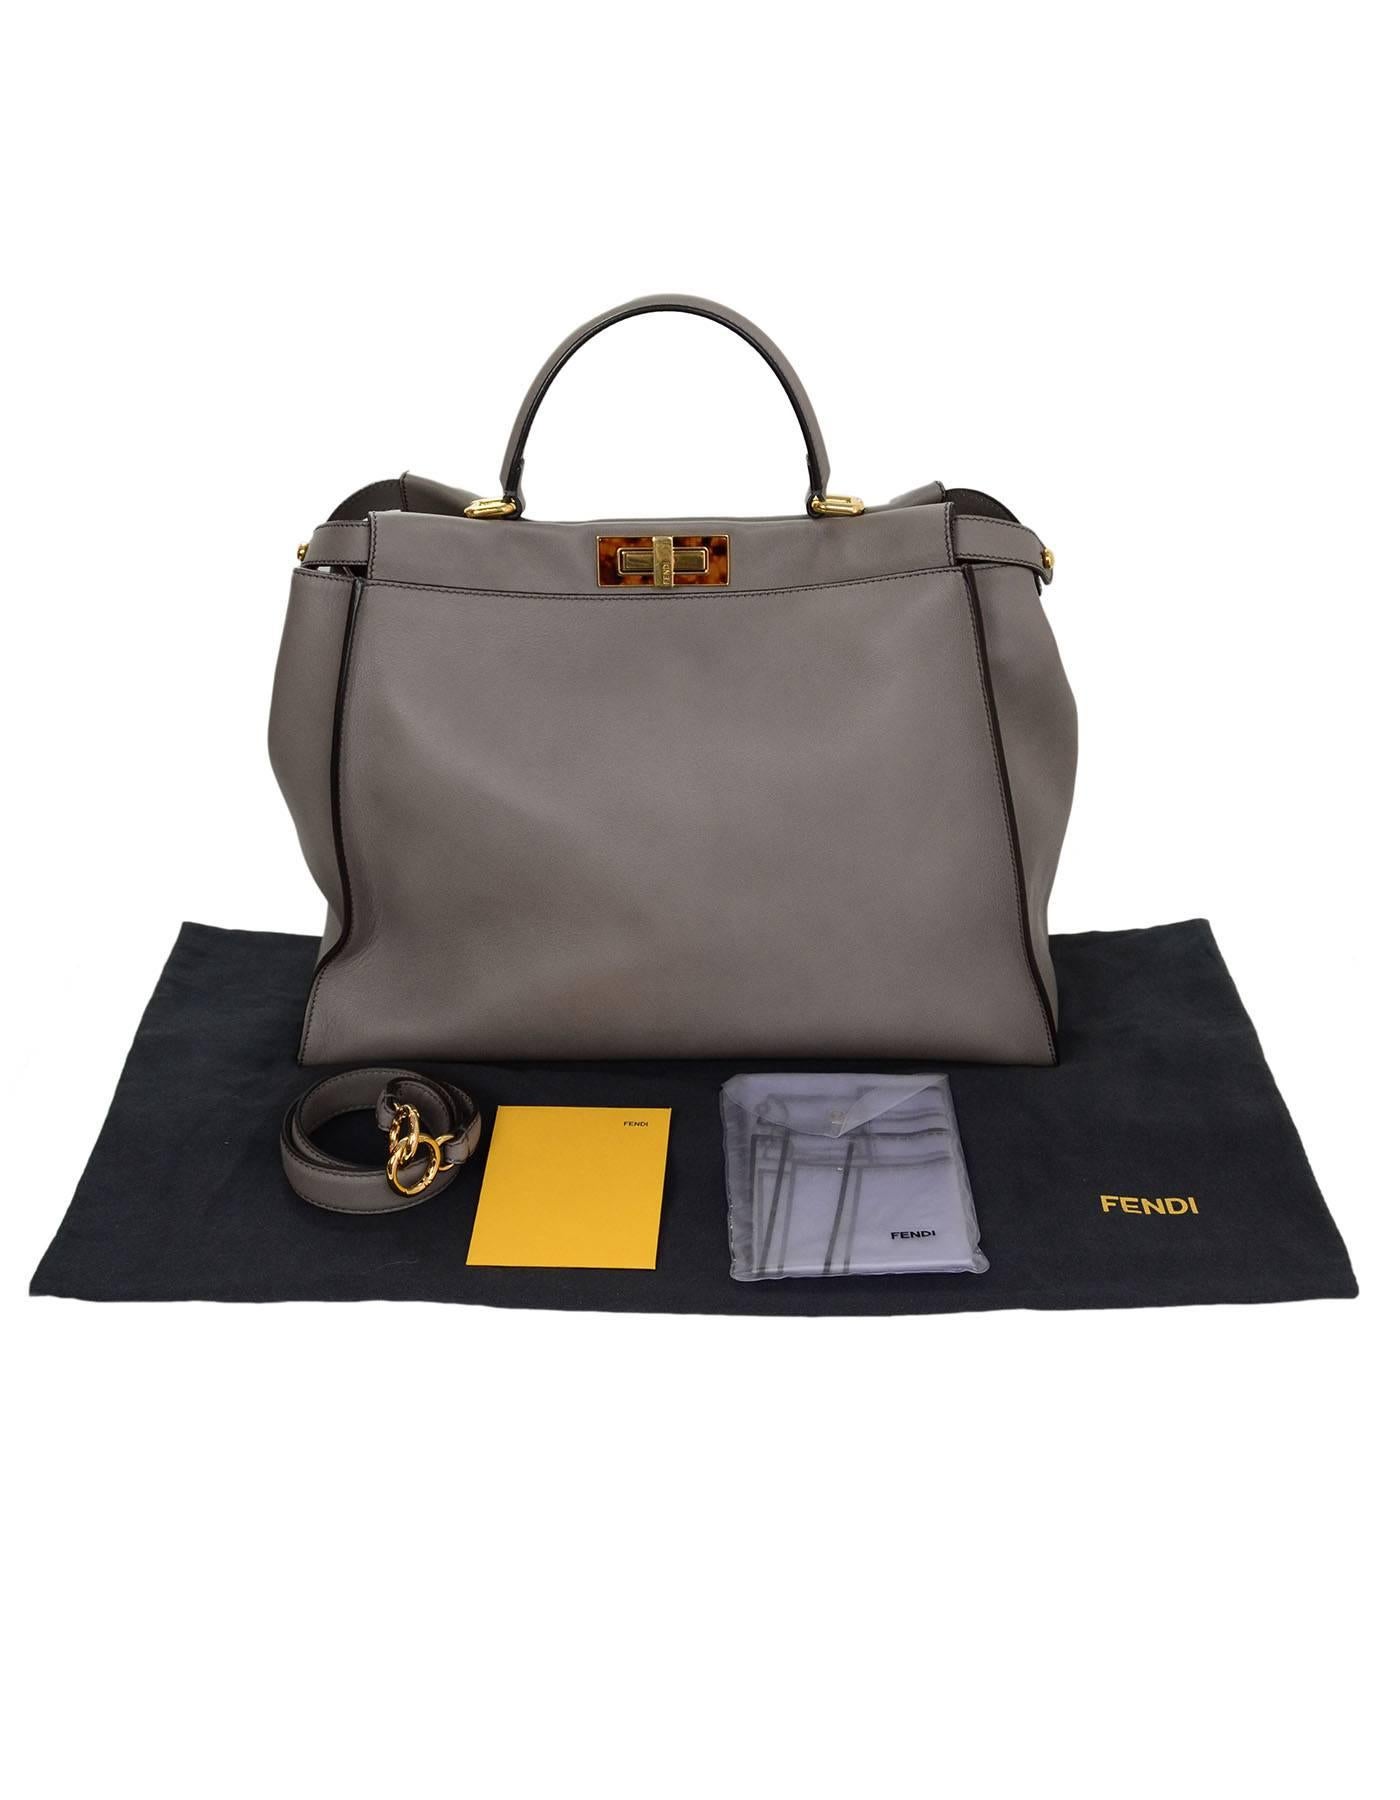 Fendi Grey Leather Large Peek-a-Boo Satchel Bag w/ Tortoise rt. $4, 700 4